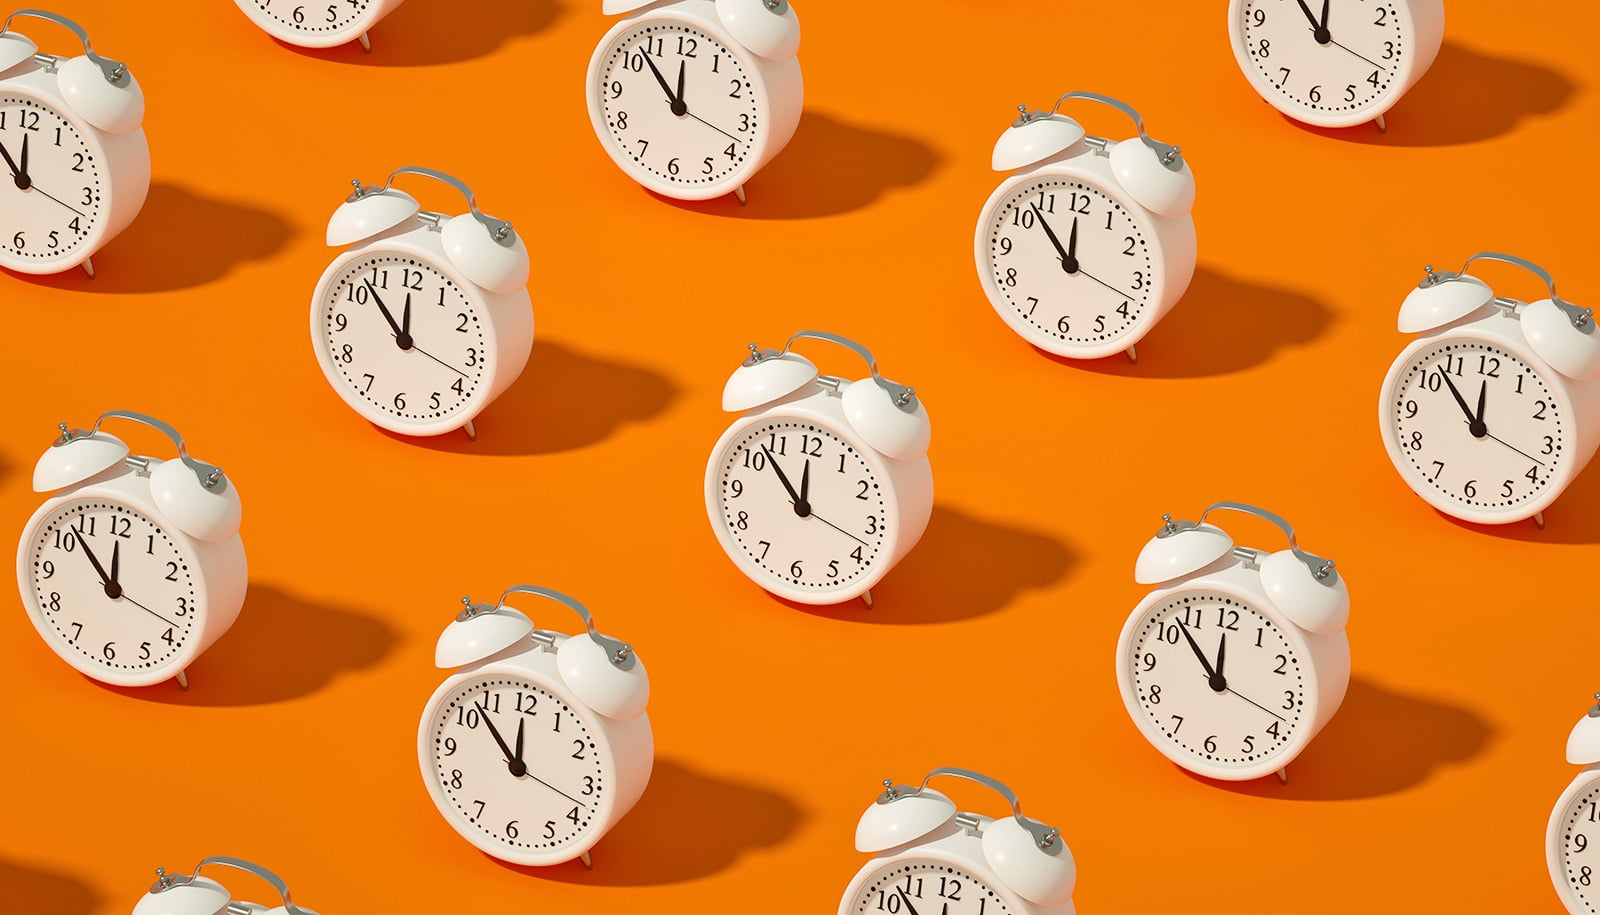 White alarm clocks in rows on an orange background.